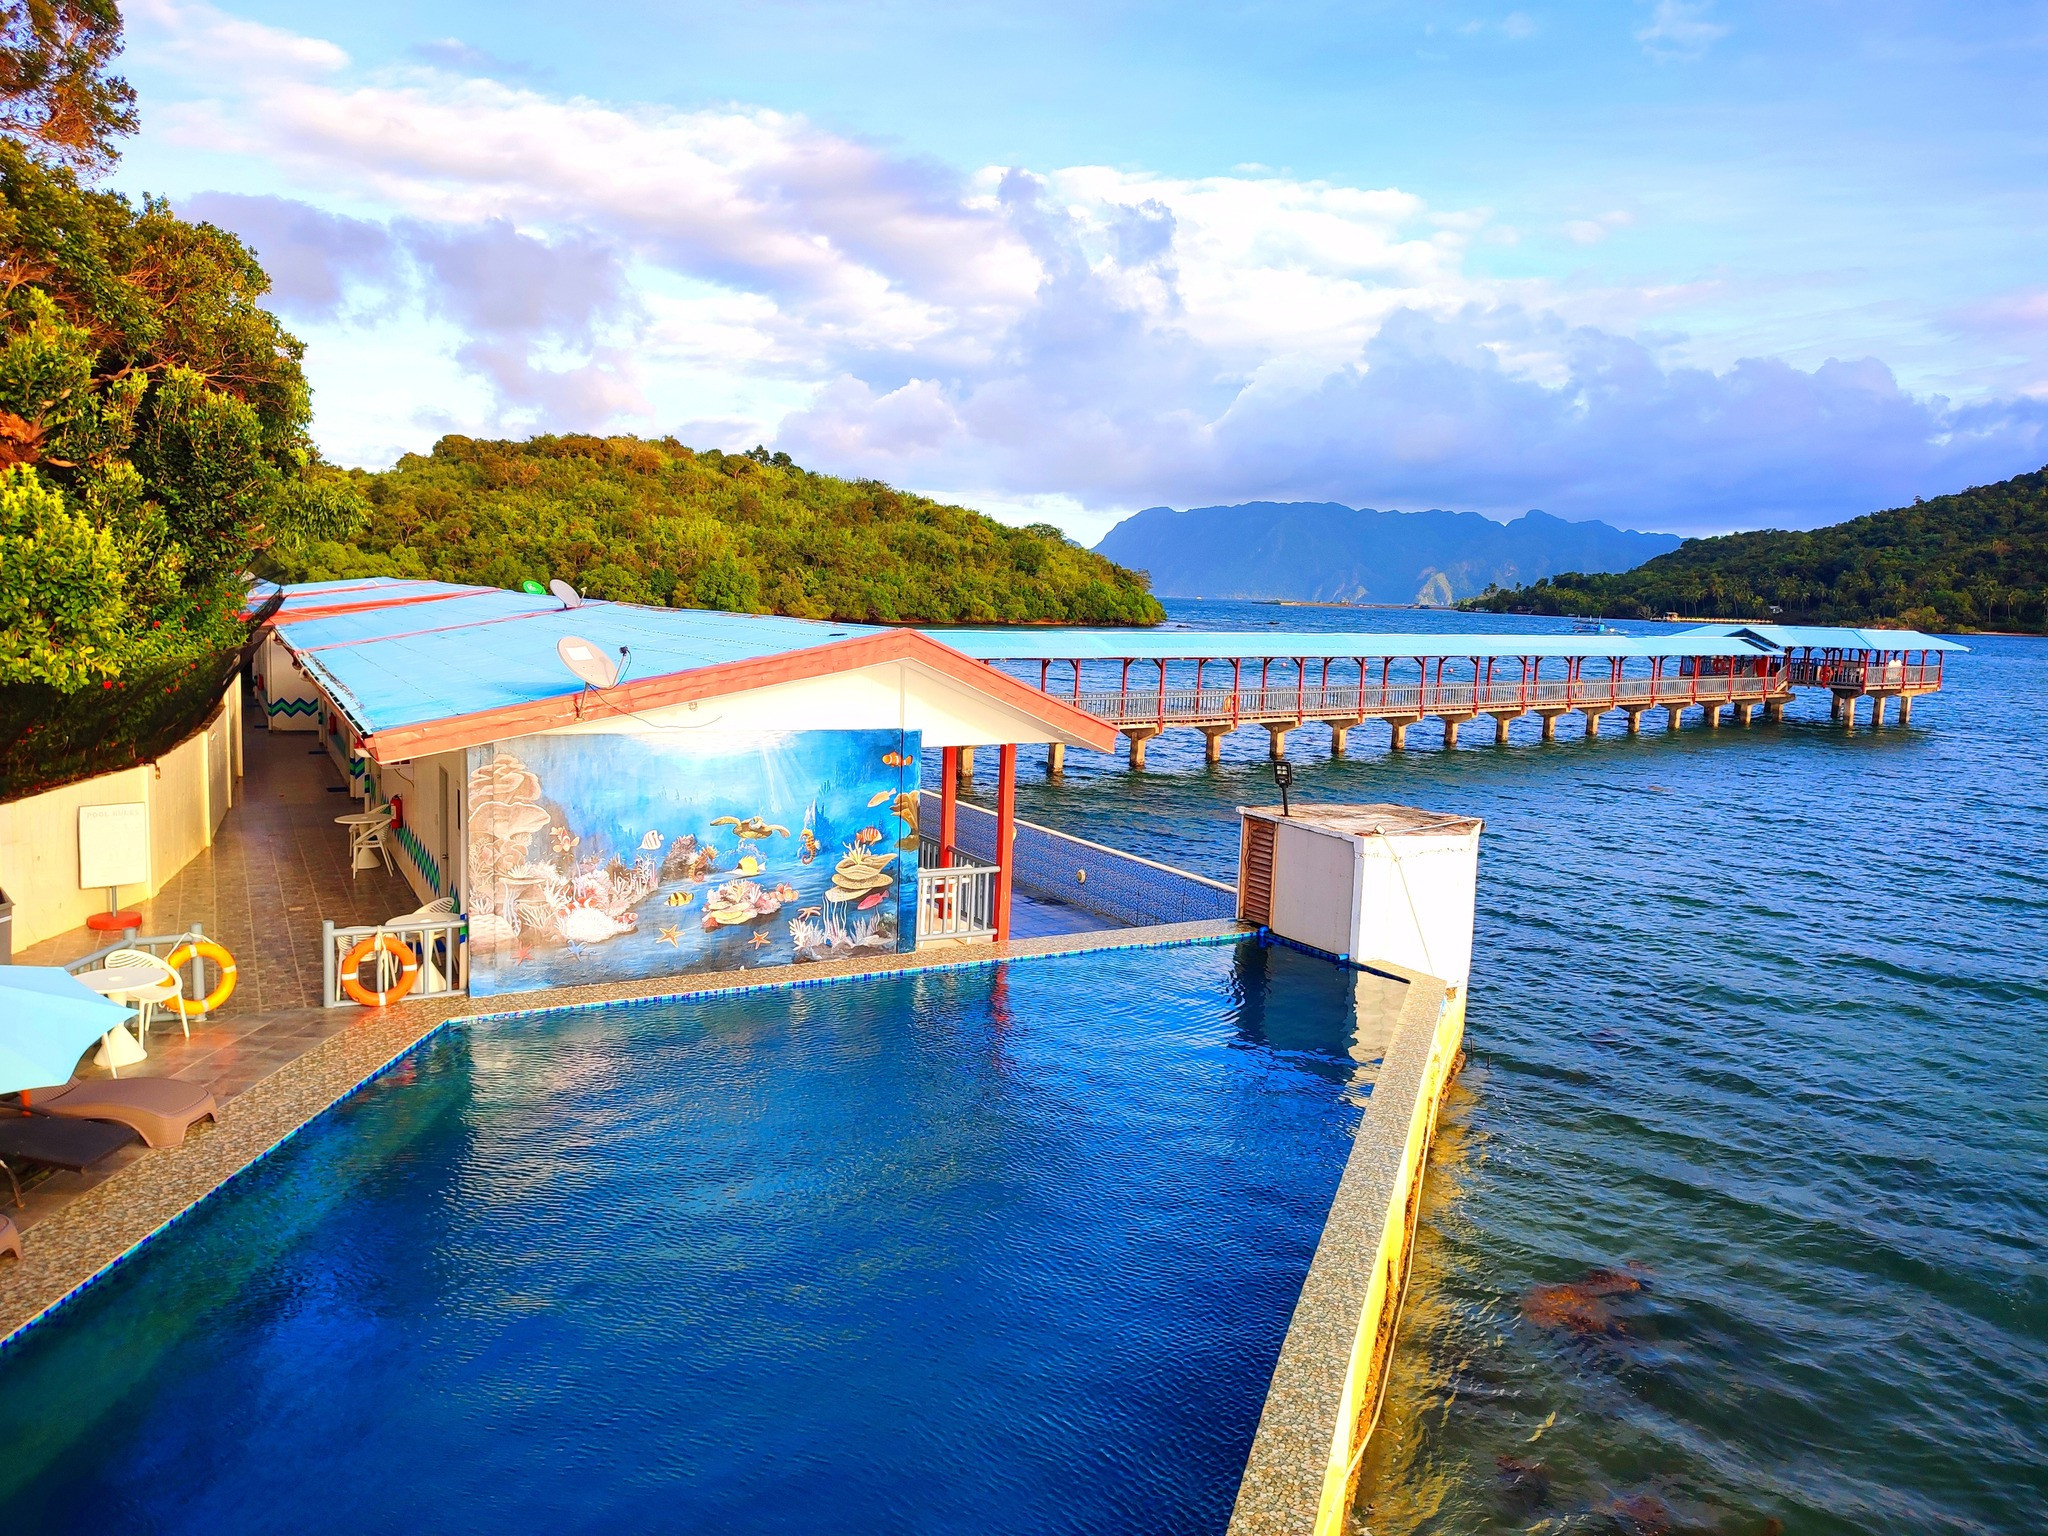 Coron Underwater Garden Resort Palawan